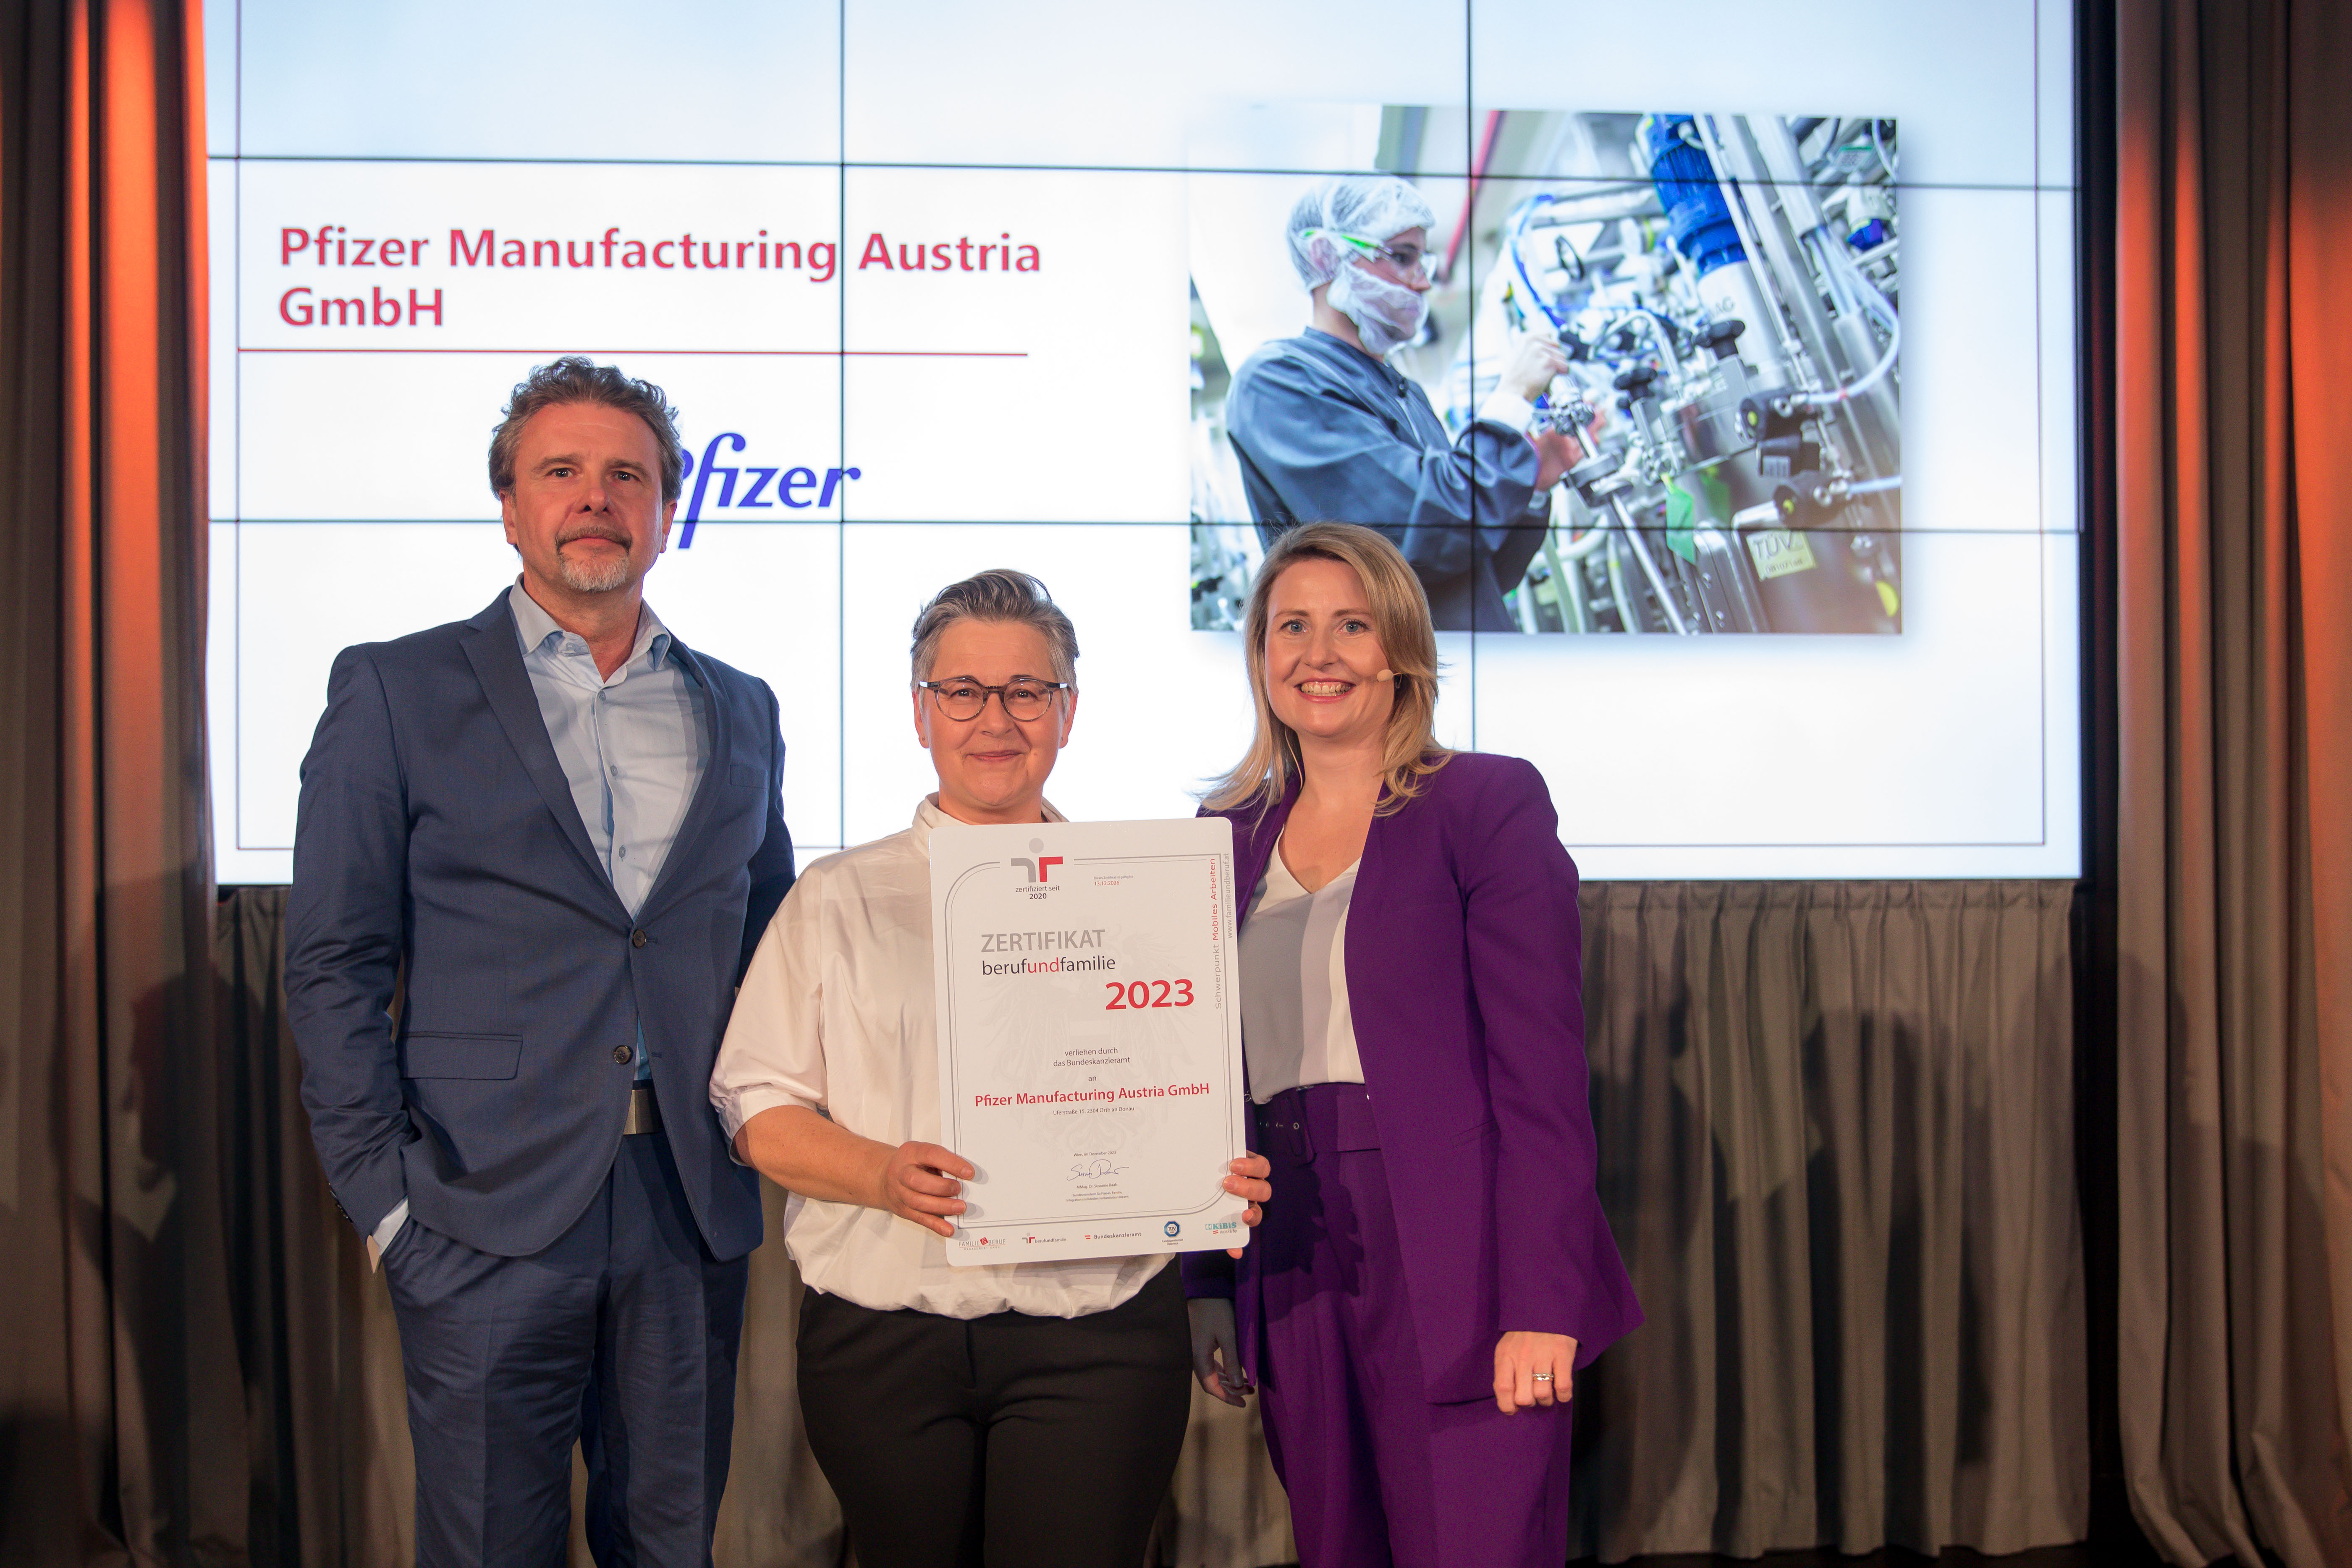 Pfizer Manufacturing Austria GmbH